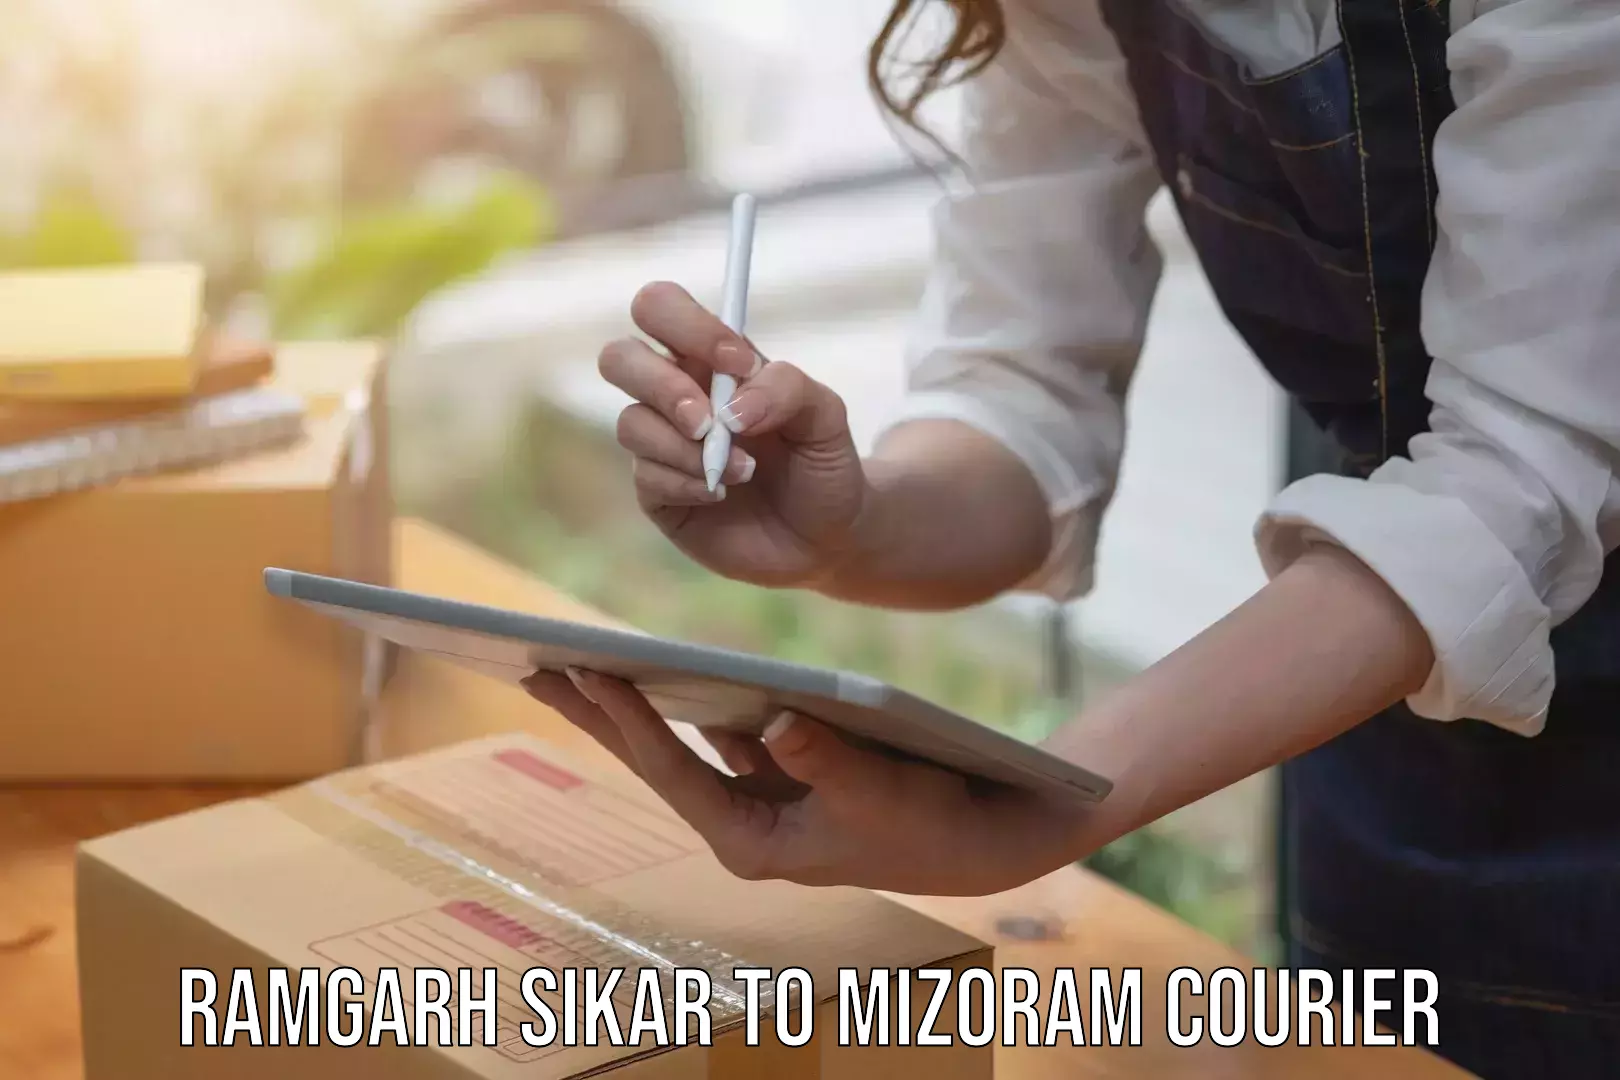 Premium courier services Ramgarh Sikar to Mizoram